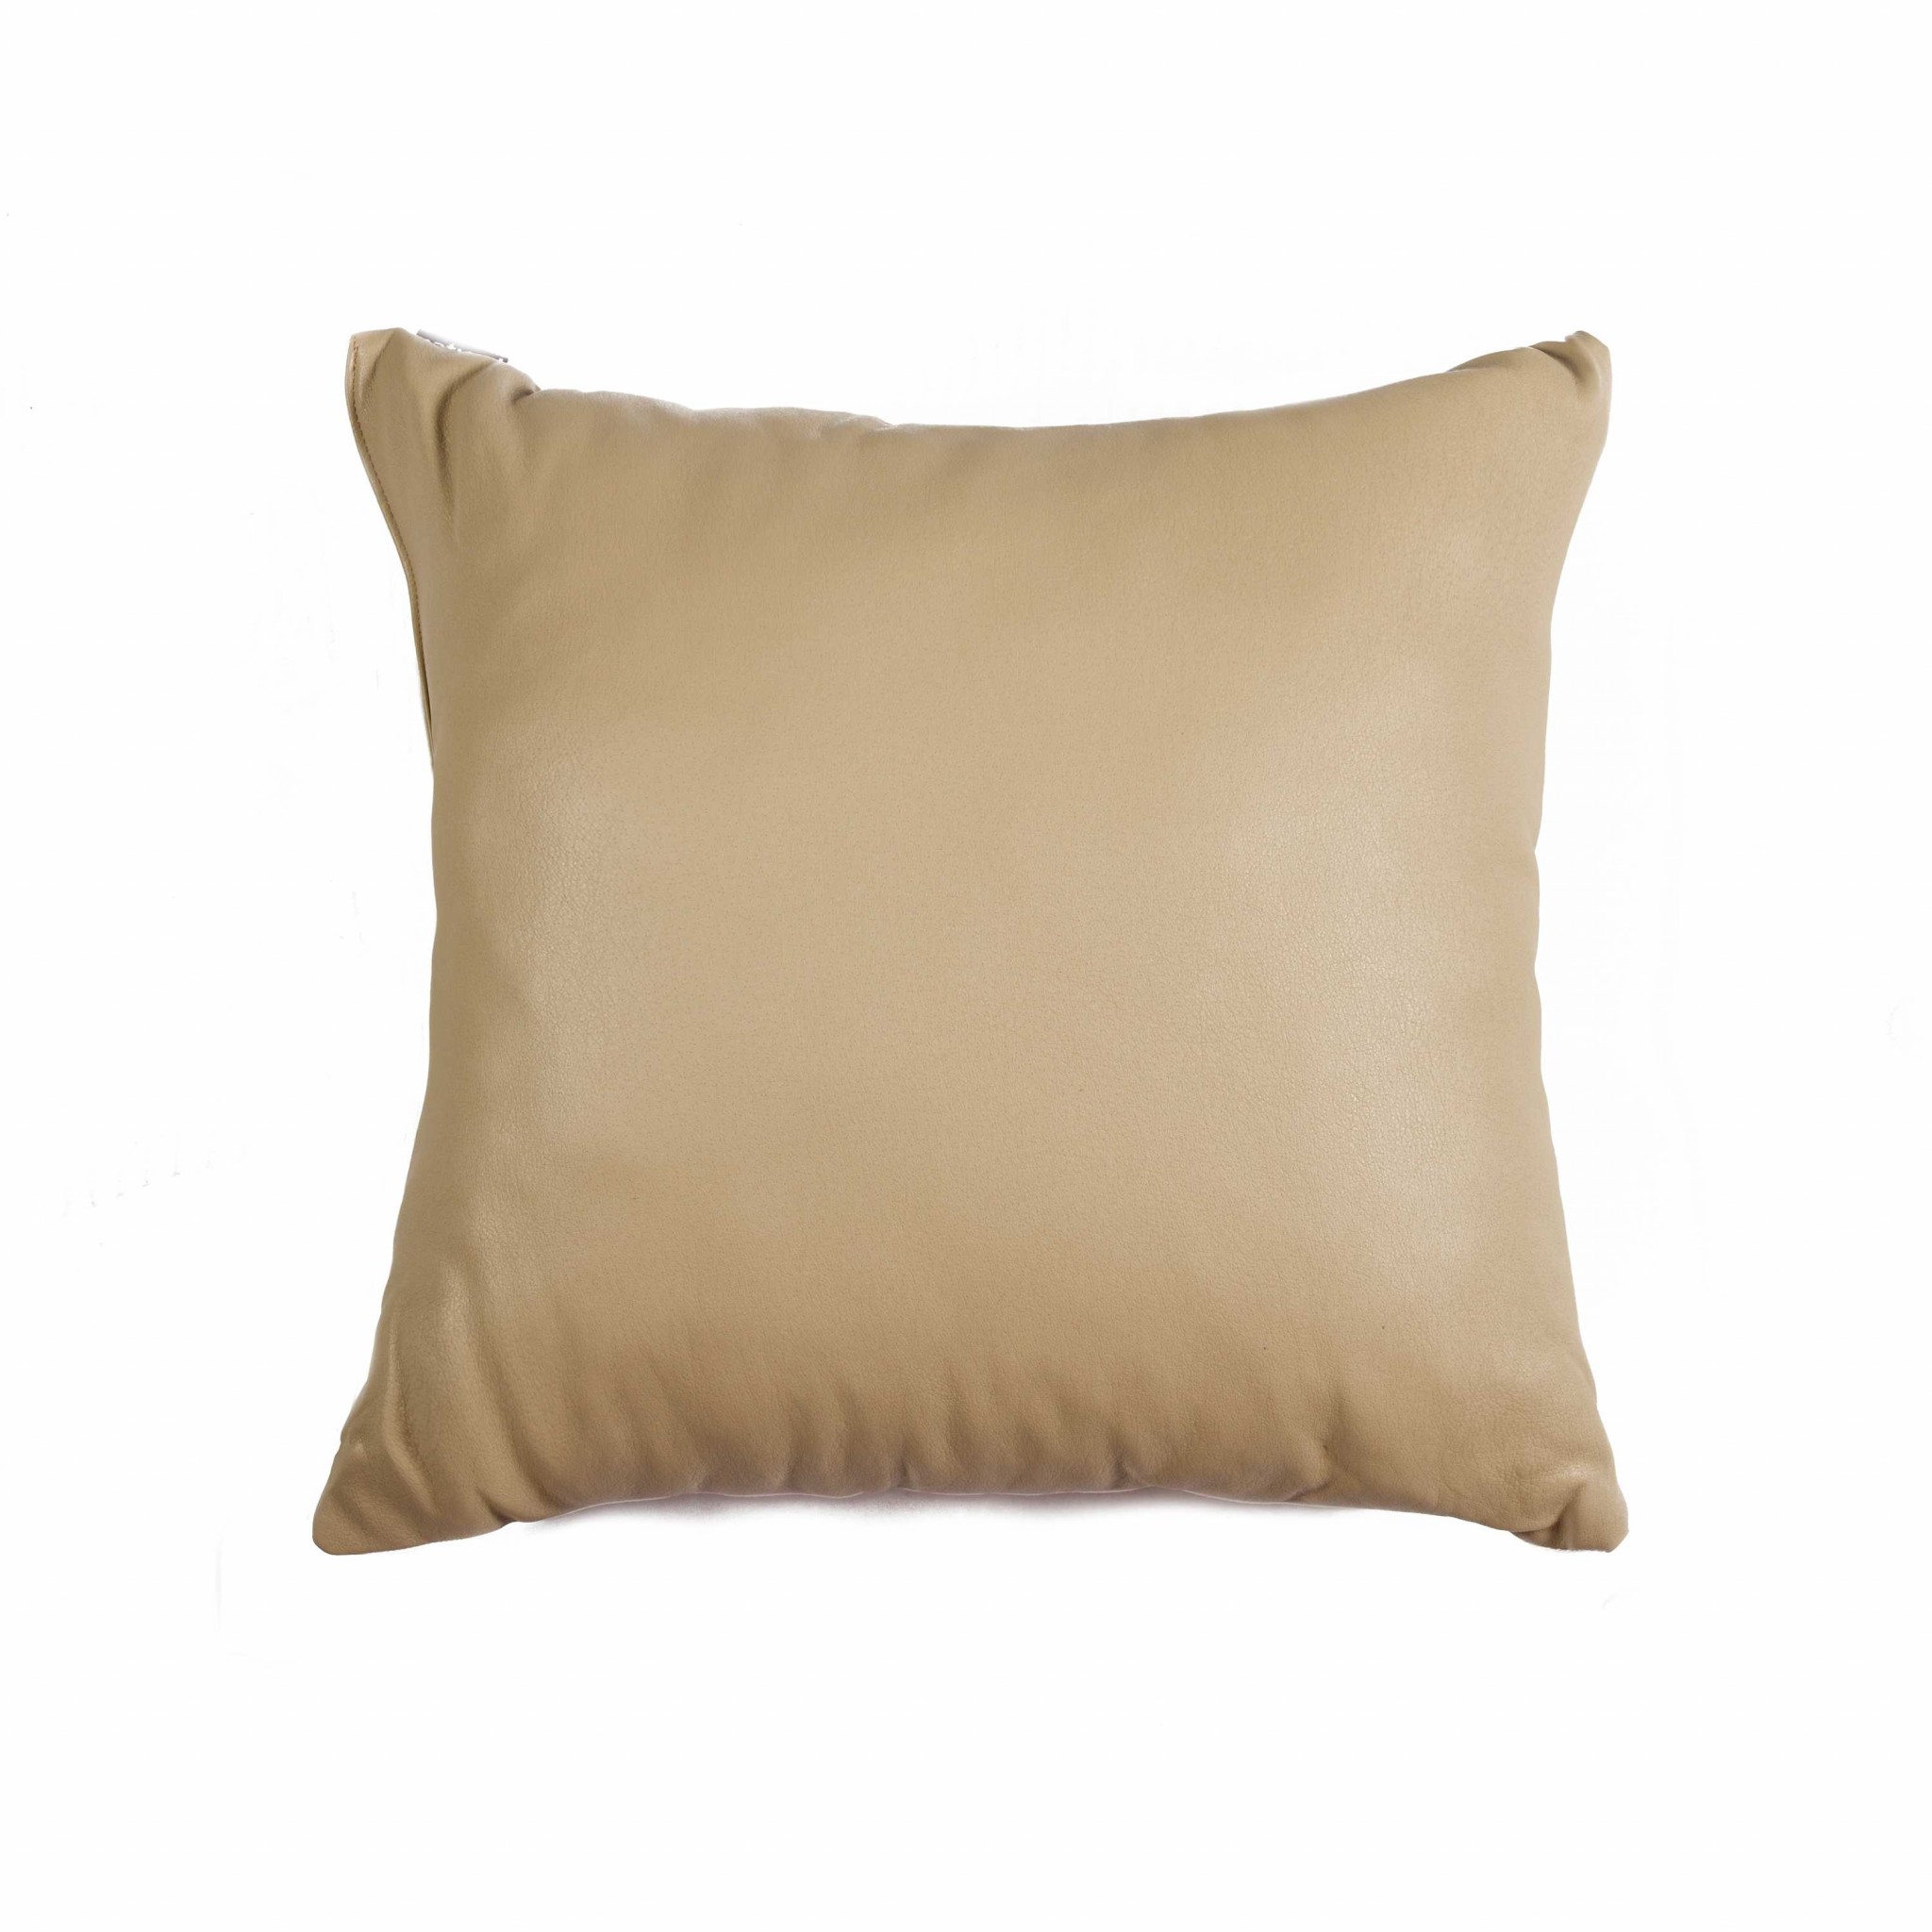 16" x 16" x 5" Tan, Cowhide Leather - Pillow